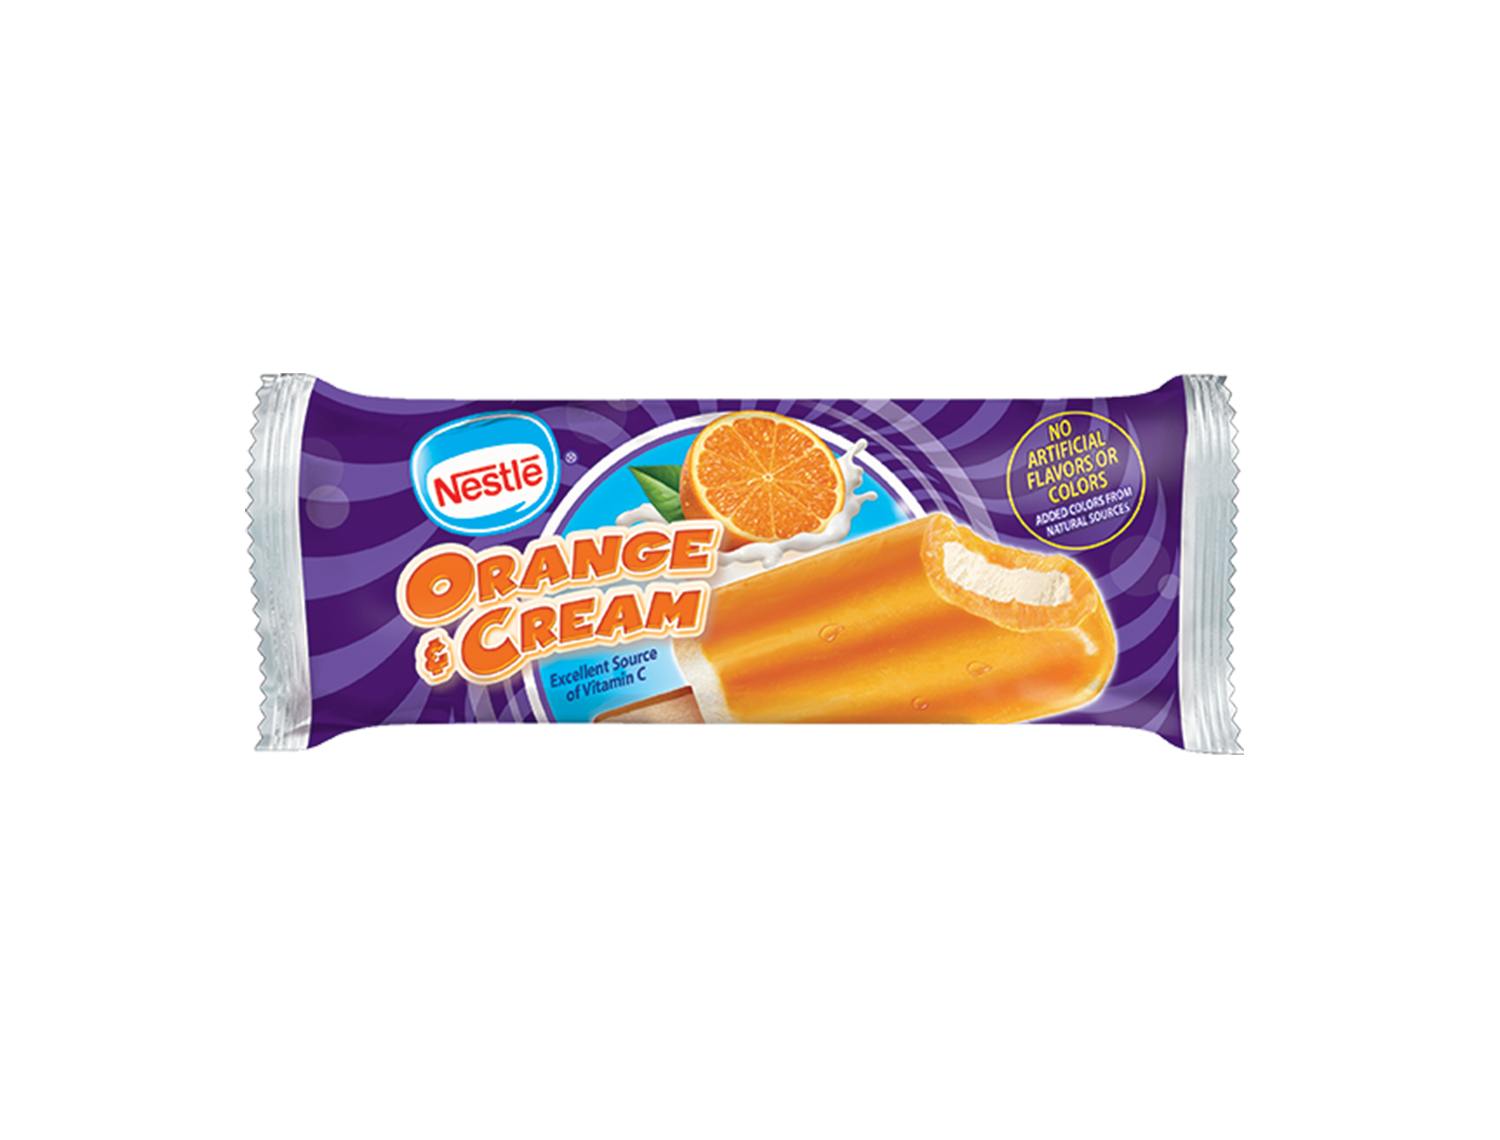 Package of Nestle Orange & Cream bars